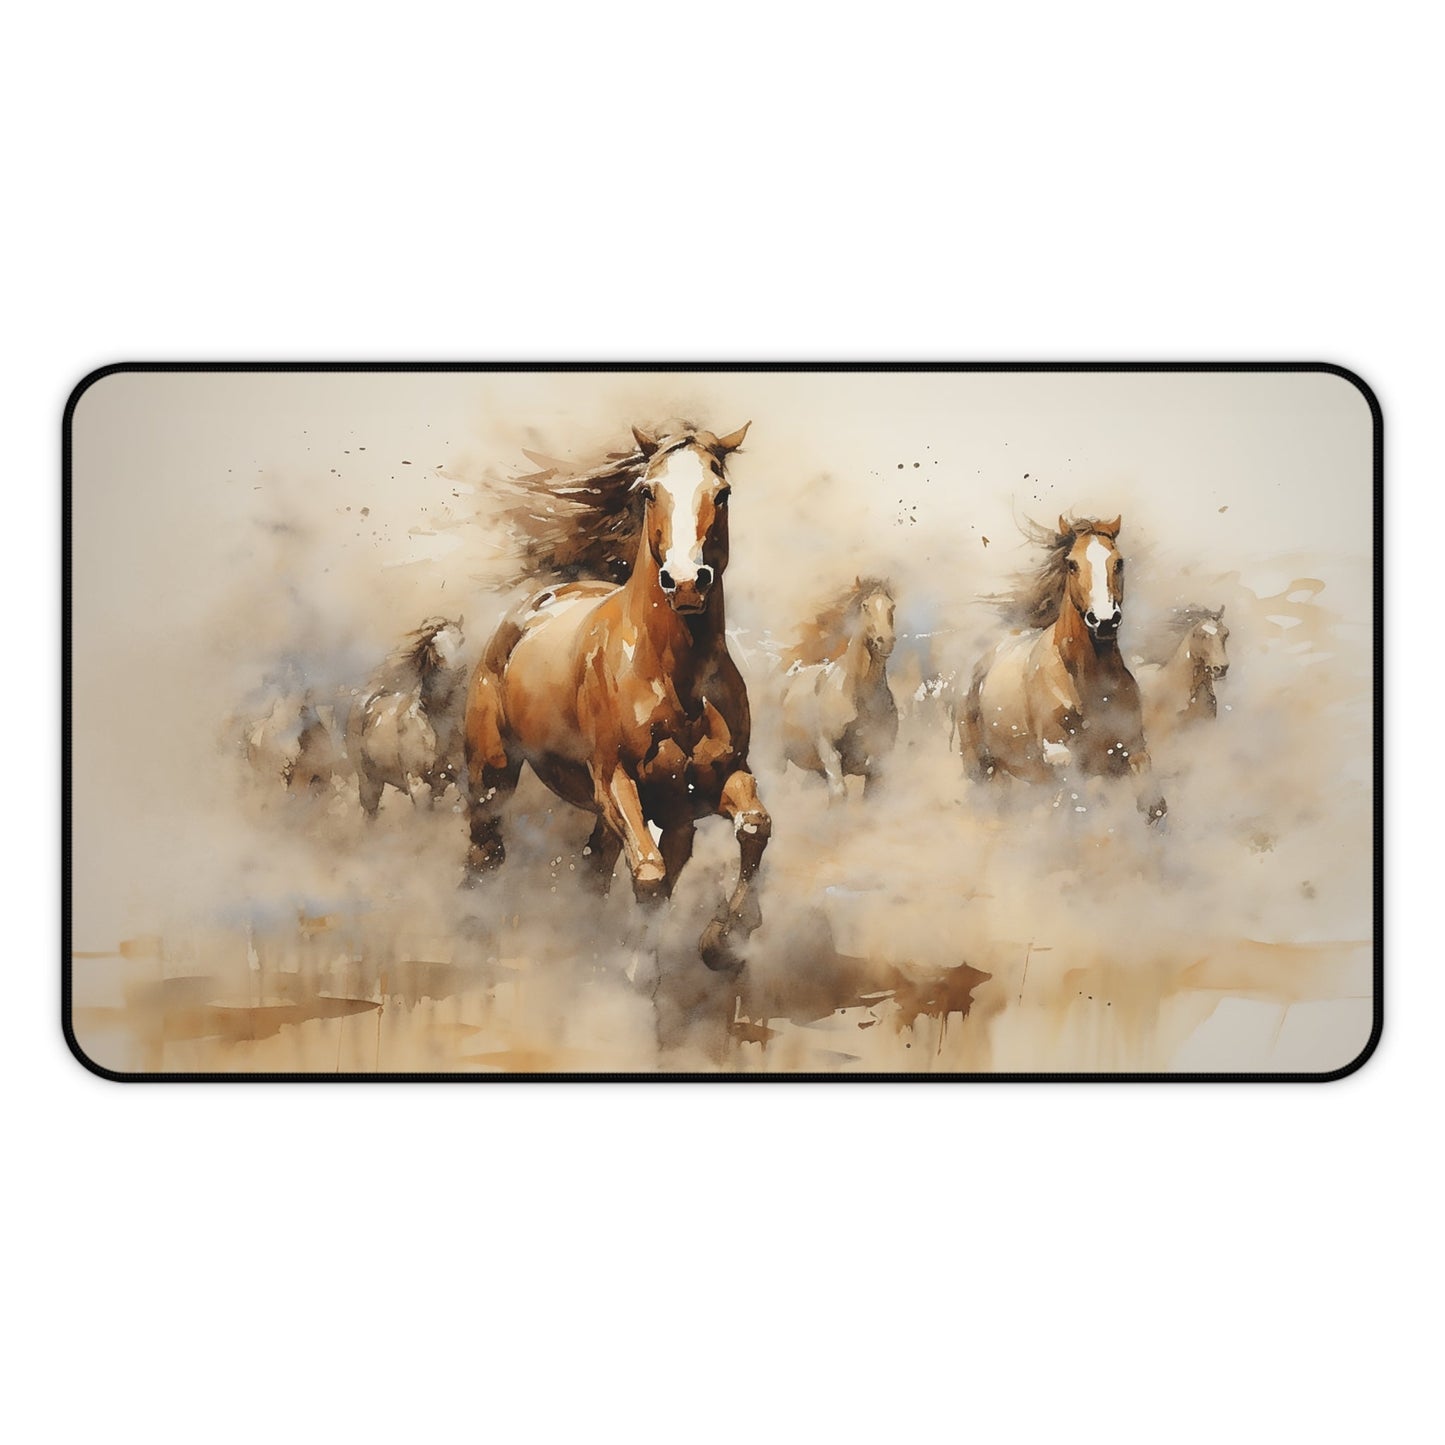 Galloping Wild Horses MousePad / Desk Mat, Wild Mustang Horse in a Beautiful Watercolor XL Desk Mat - Horse Love, Gift for Horse Person - FlooredByArt